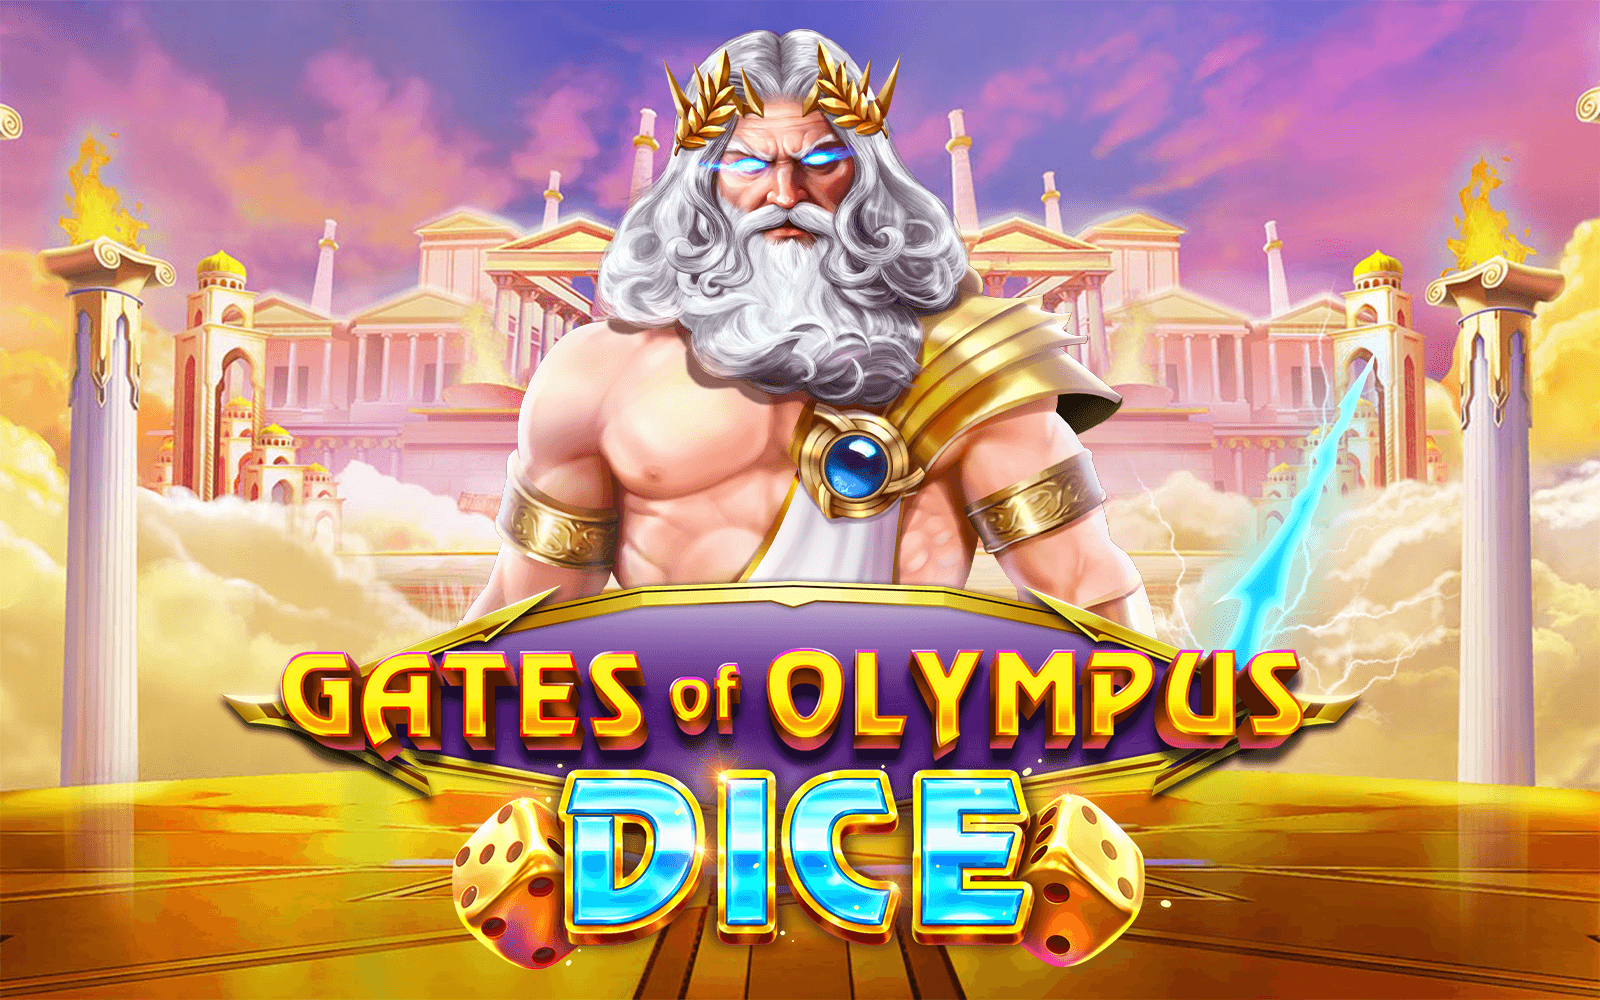 Gioca a Gates of Olympus Dice sul casino online Starcasino.be